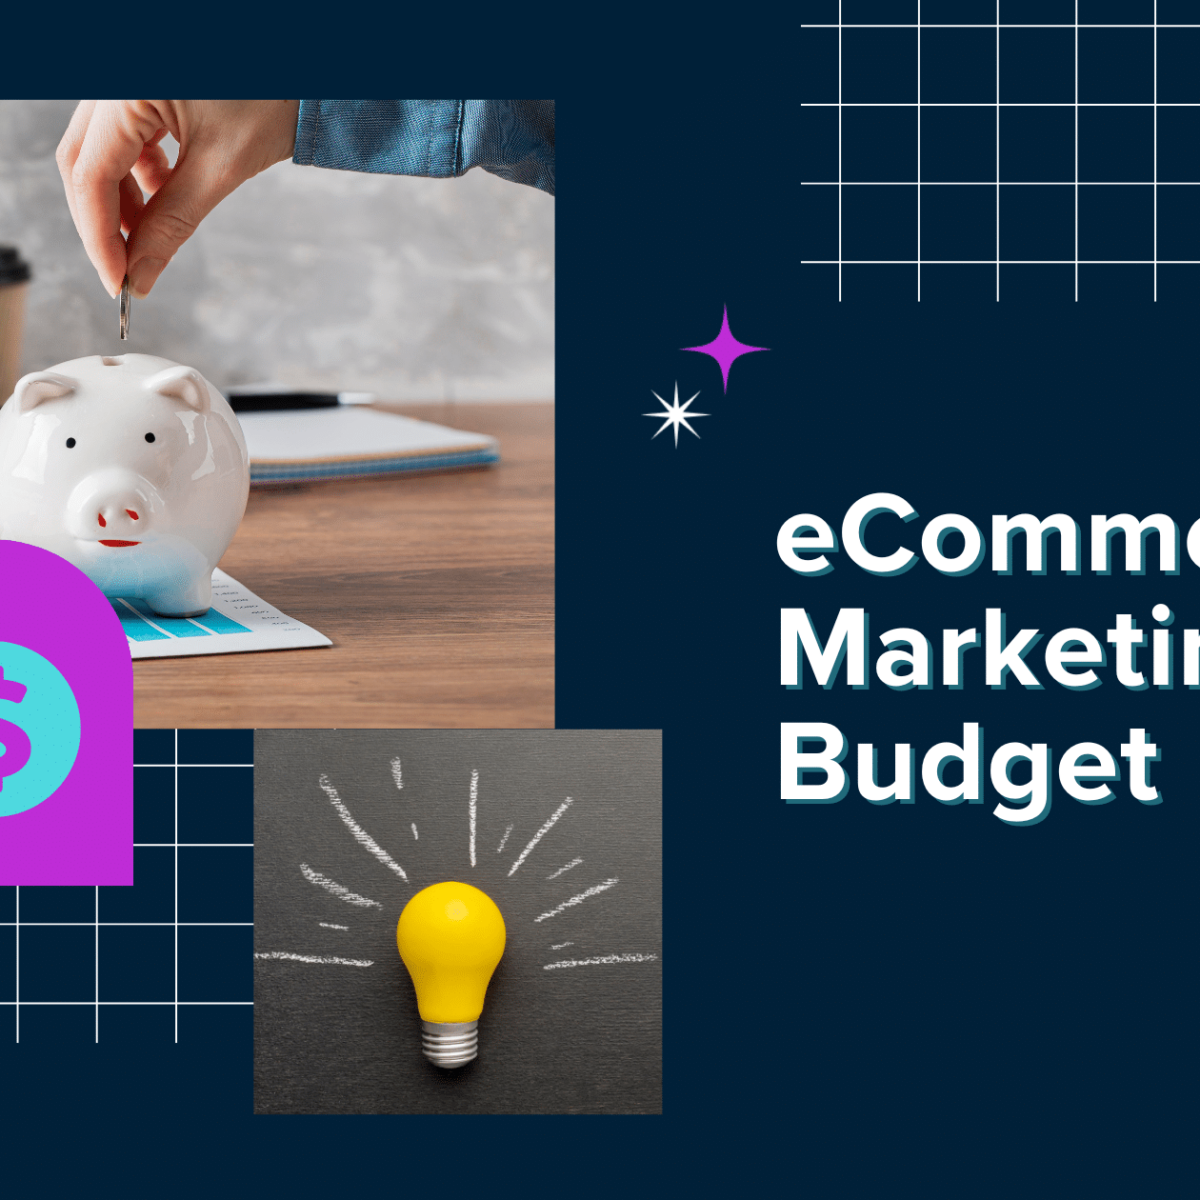 ecommerce marketing on a budget blog